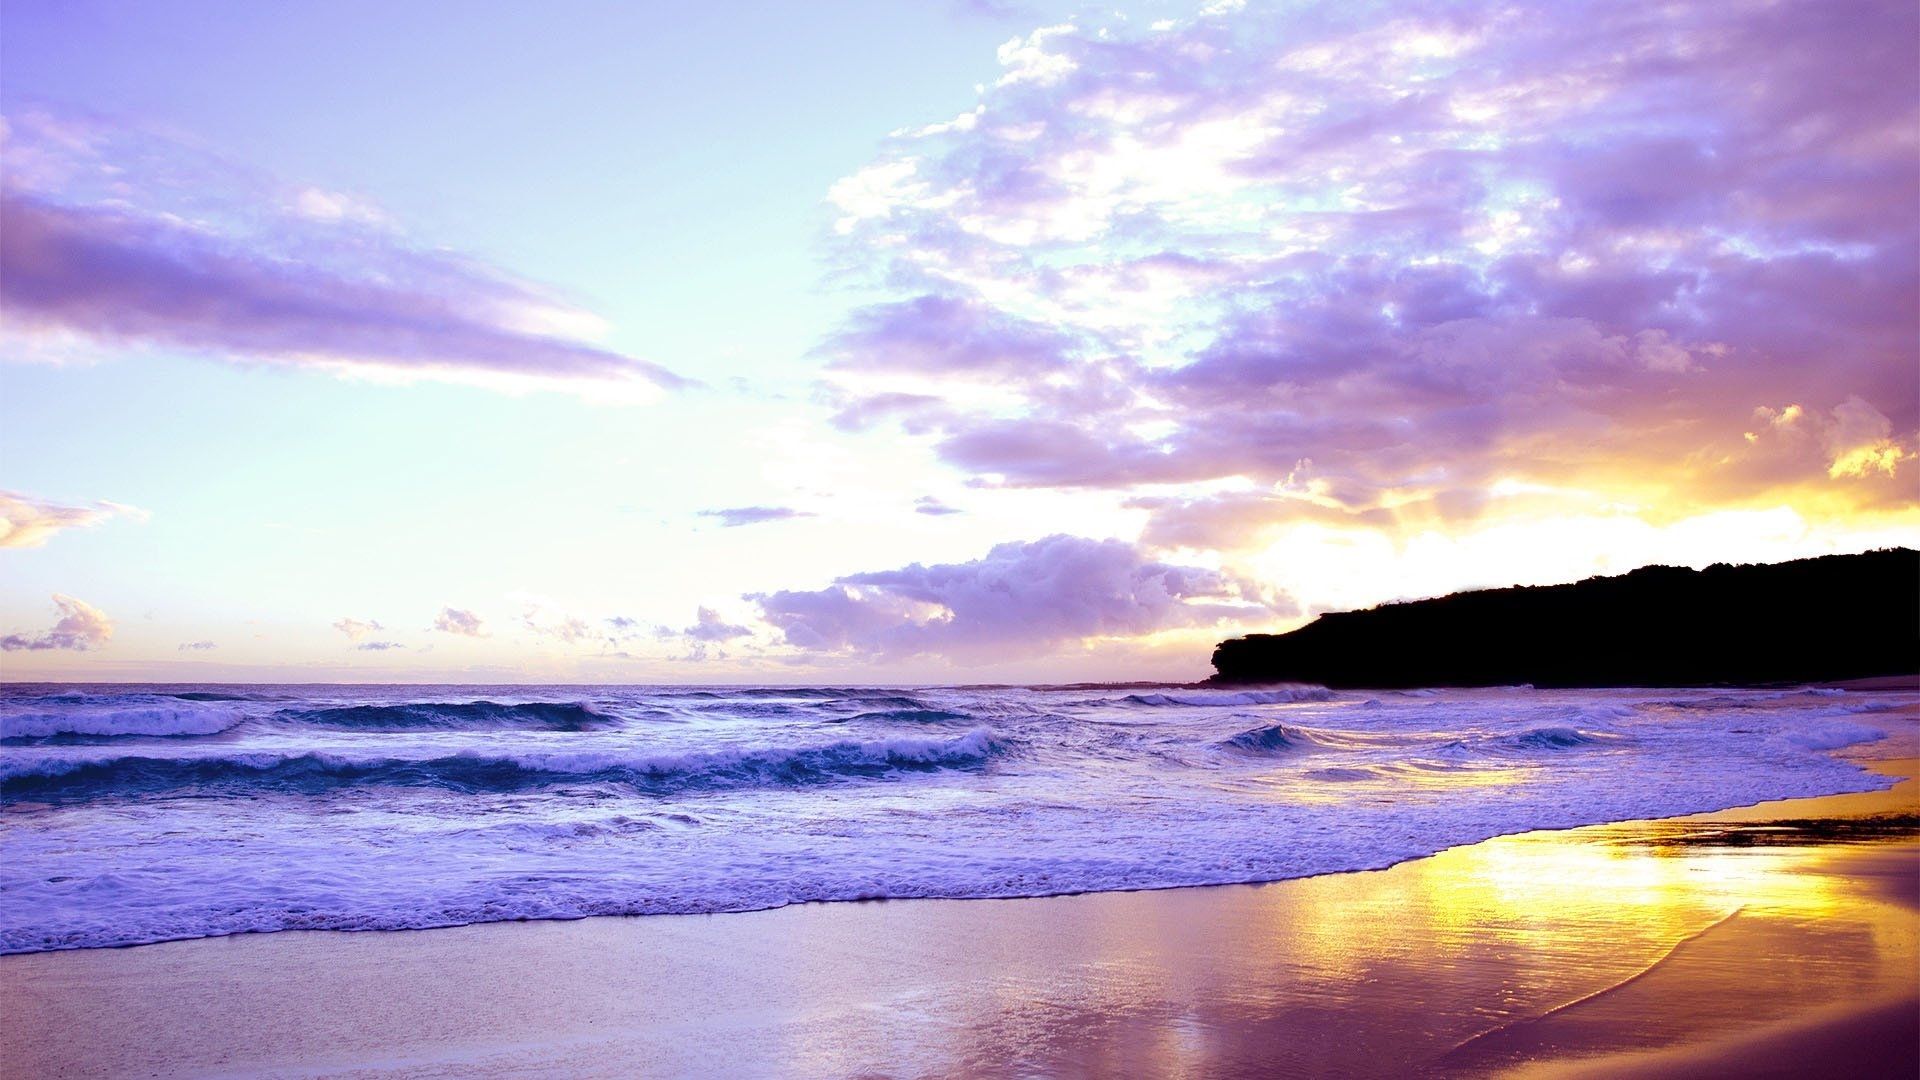 Ocean Sunset full hd 1080p wallpaper